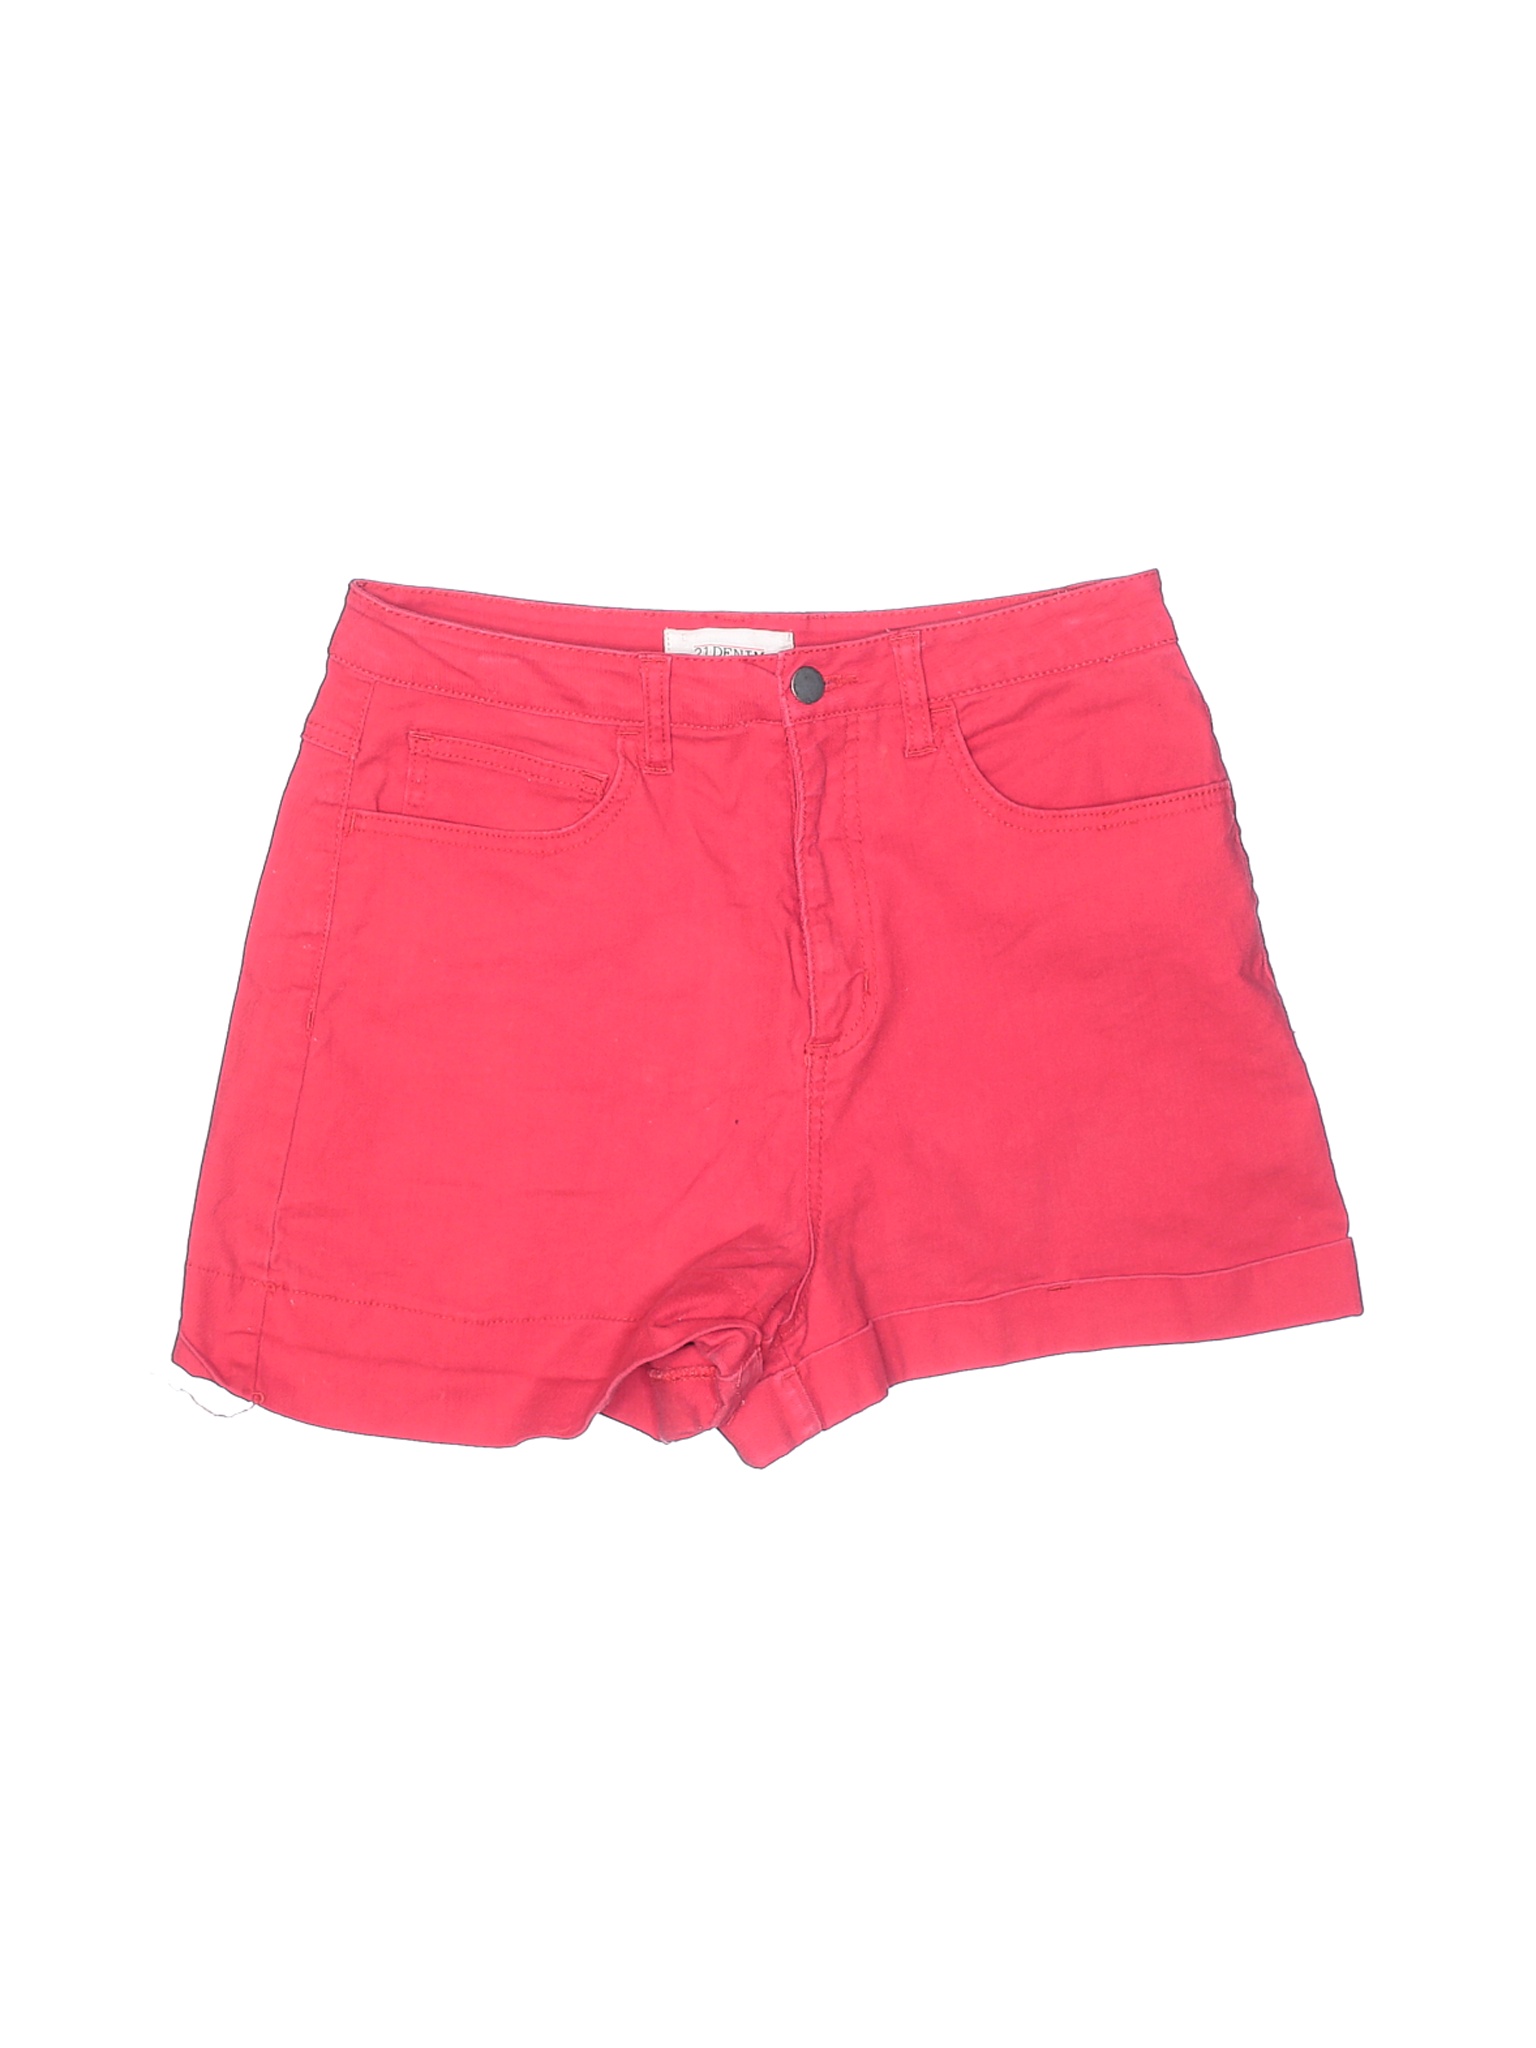 2.1 DENIM Women Pink Denim Shorts 30W | eBay